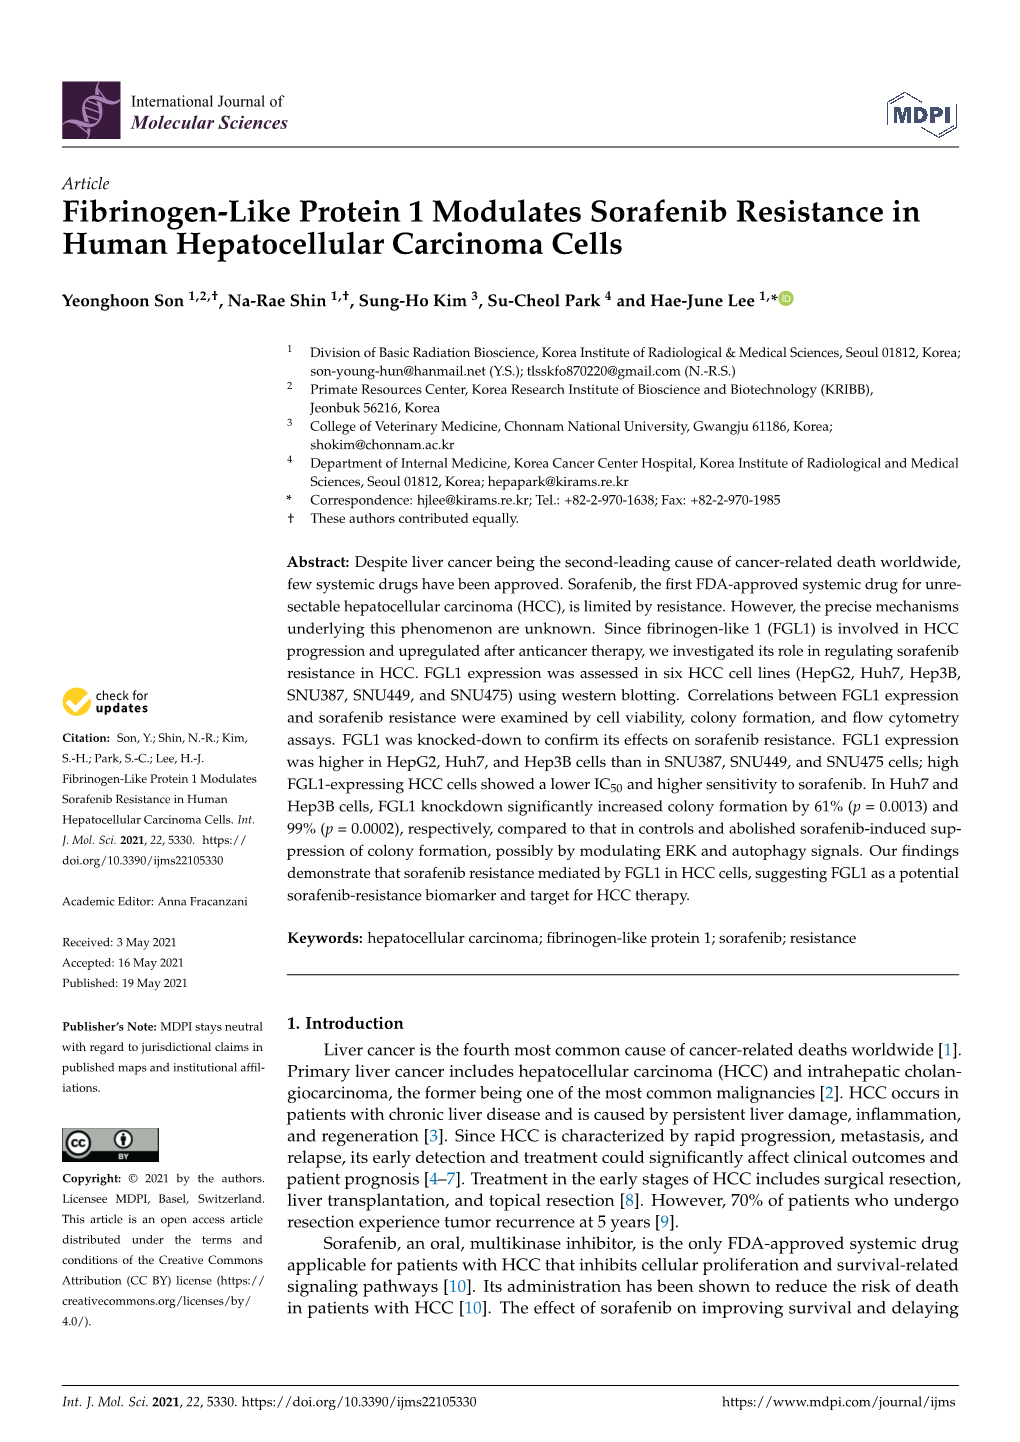 Fibrinogen-Like Protein 1 Modulates Sorafenib Resistance in Human Hepatocellular Carcinoma Cells